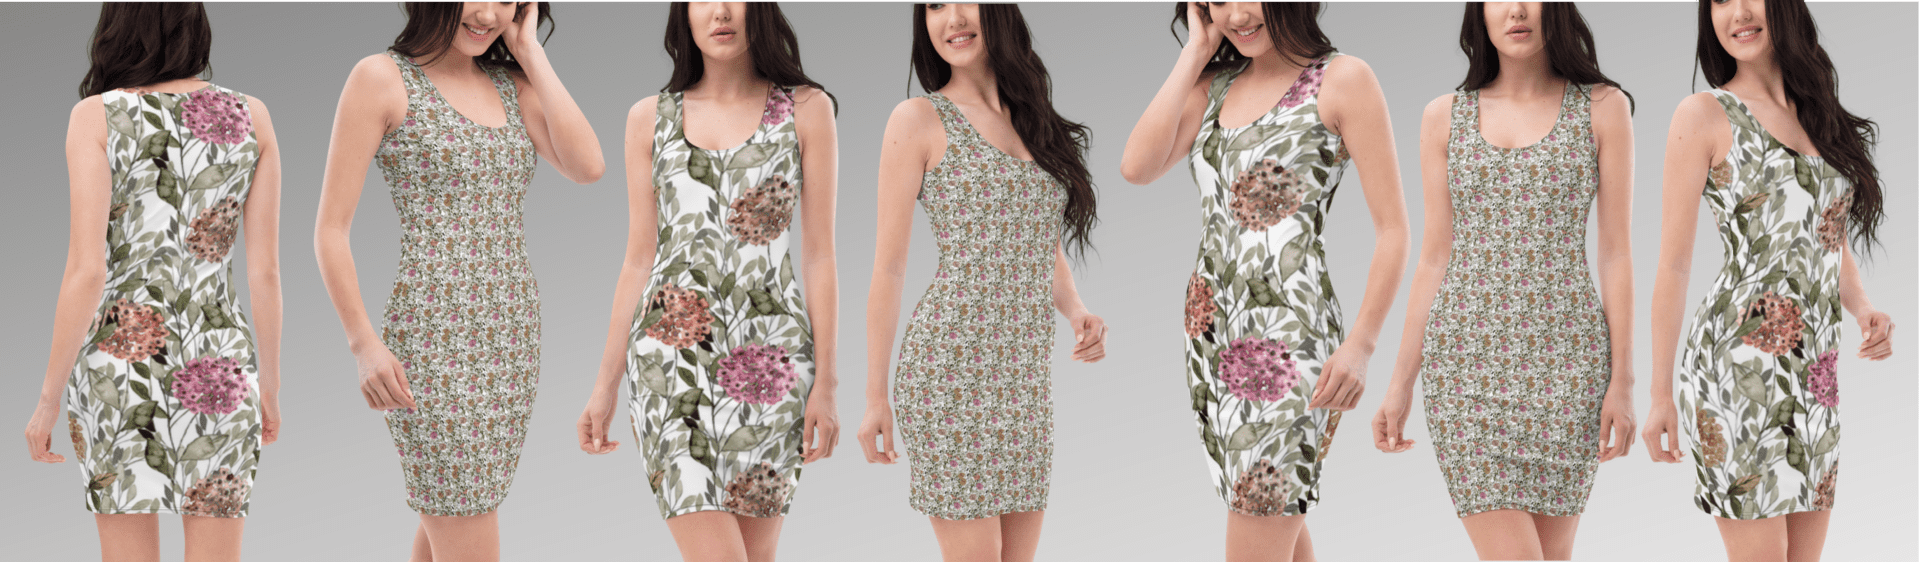 Women model floral print dresses